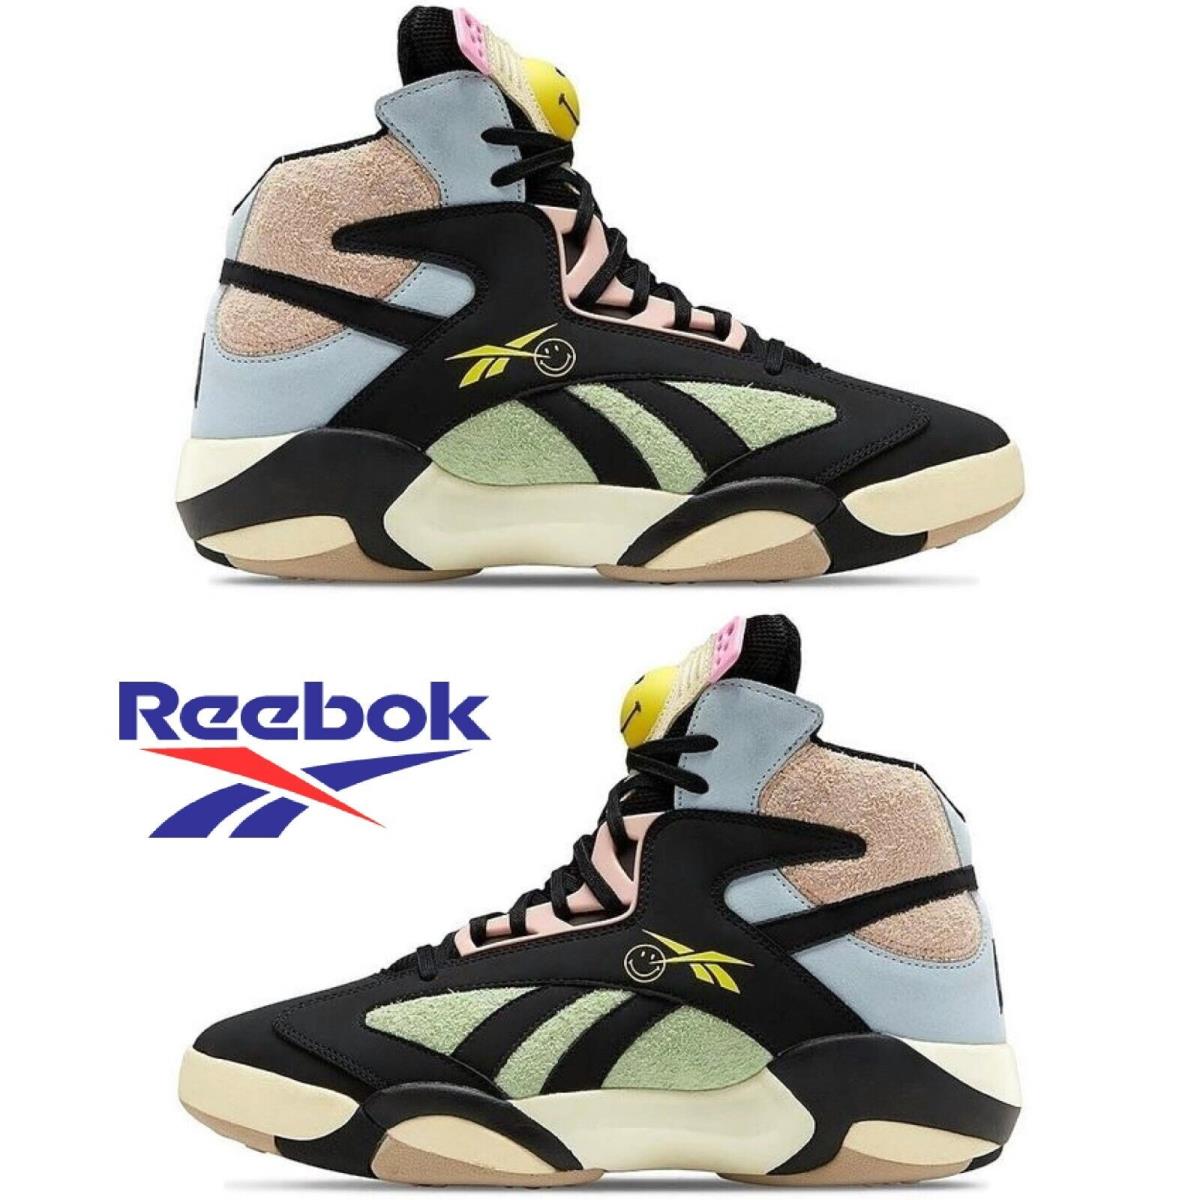 Reebok Shaq Attaq Retro Basketball Shoes Men`s Sneakers Running Casual Sport - Black, Manufacturer: Core Black/Dreamy Blue/Stinger Yellow